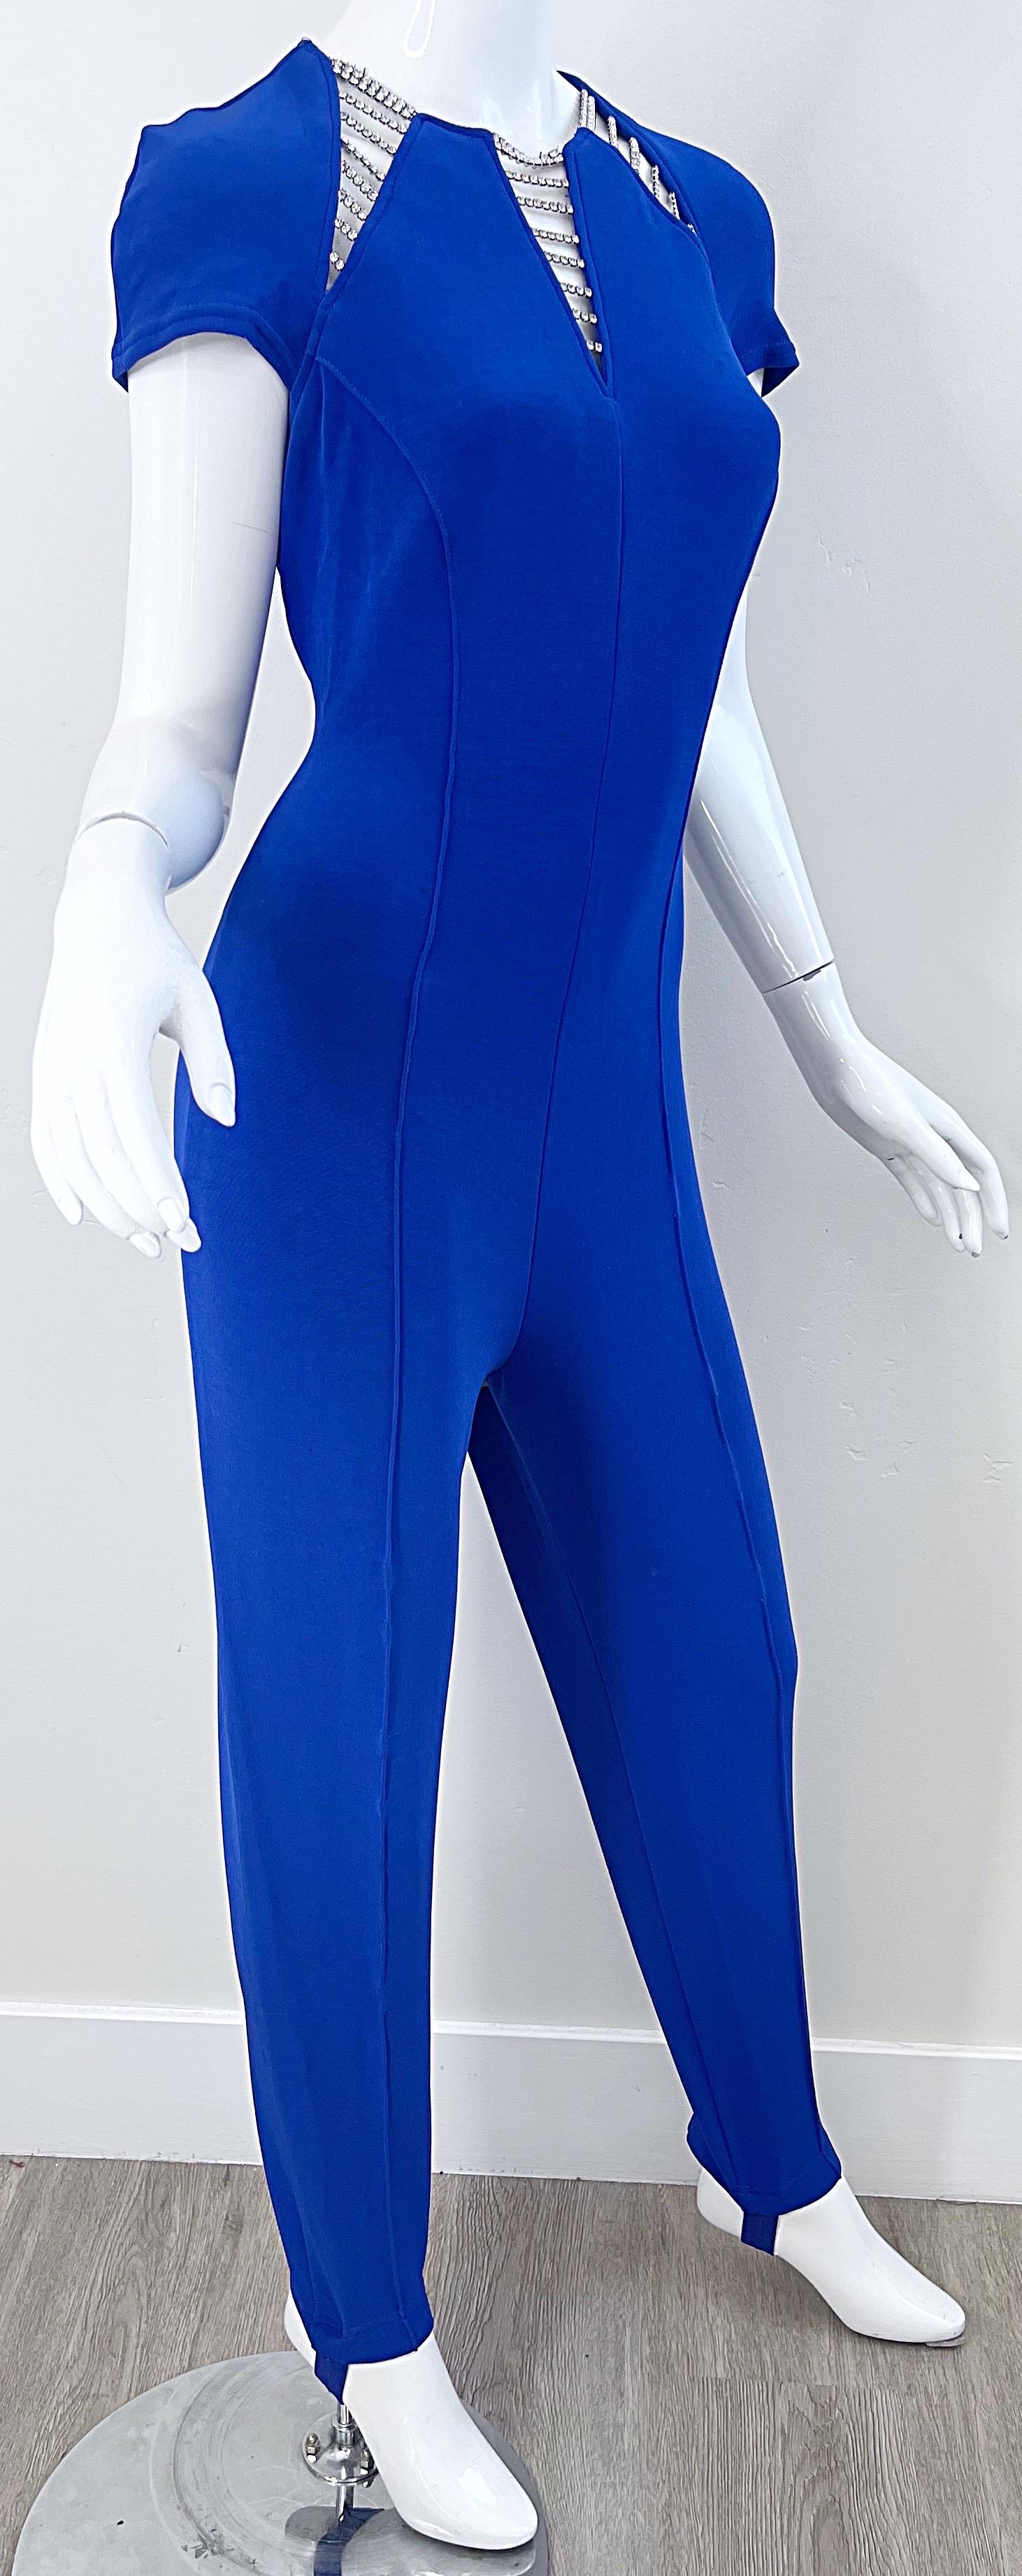 1980s Tadashi Royal Blue Rhinestone Cut Out Stirrup Pant Vintage 80s Jumpsuit For Sale 4